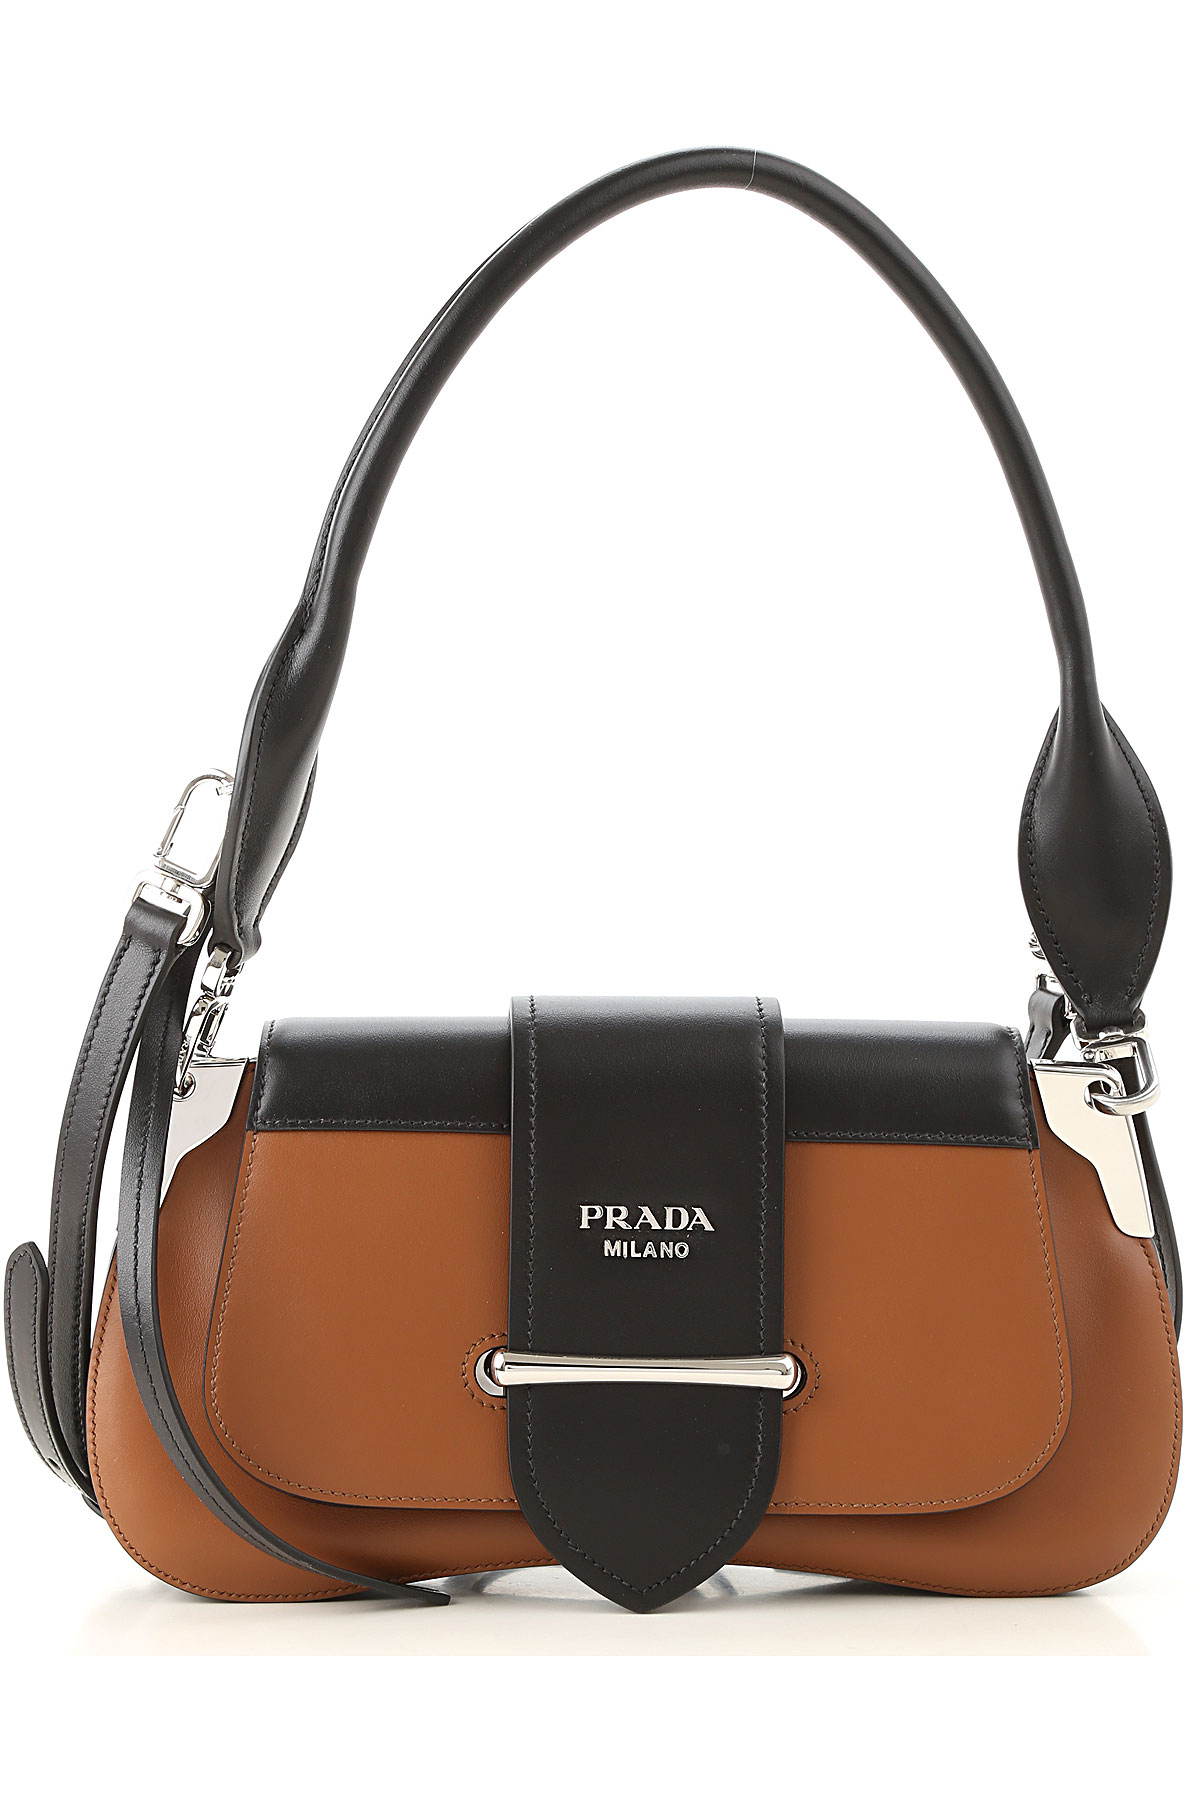 Handbags Prada, Style code: 1bd168-2aix-f0r6p